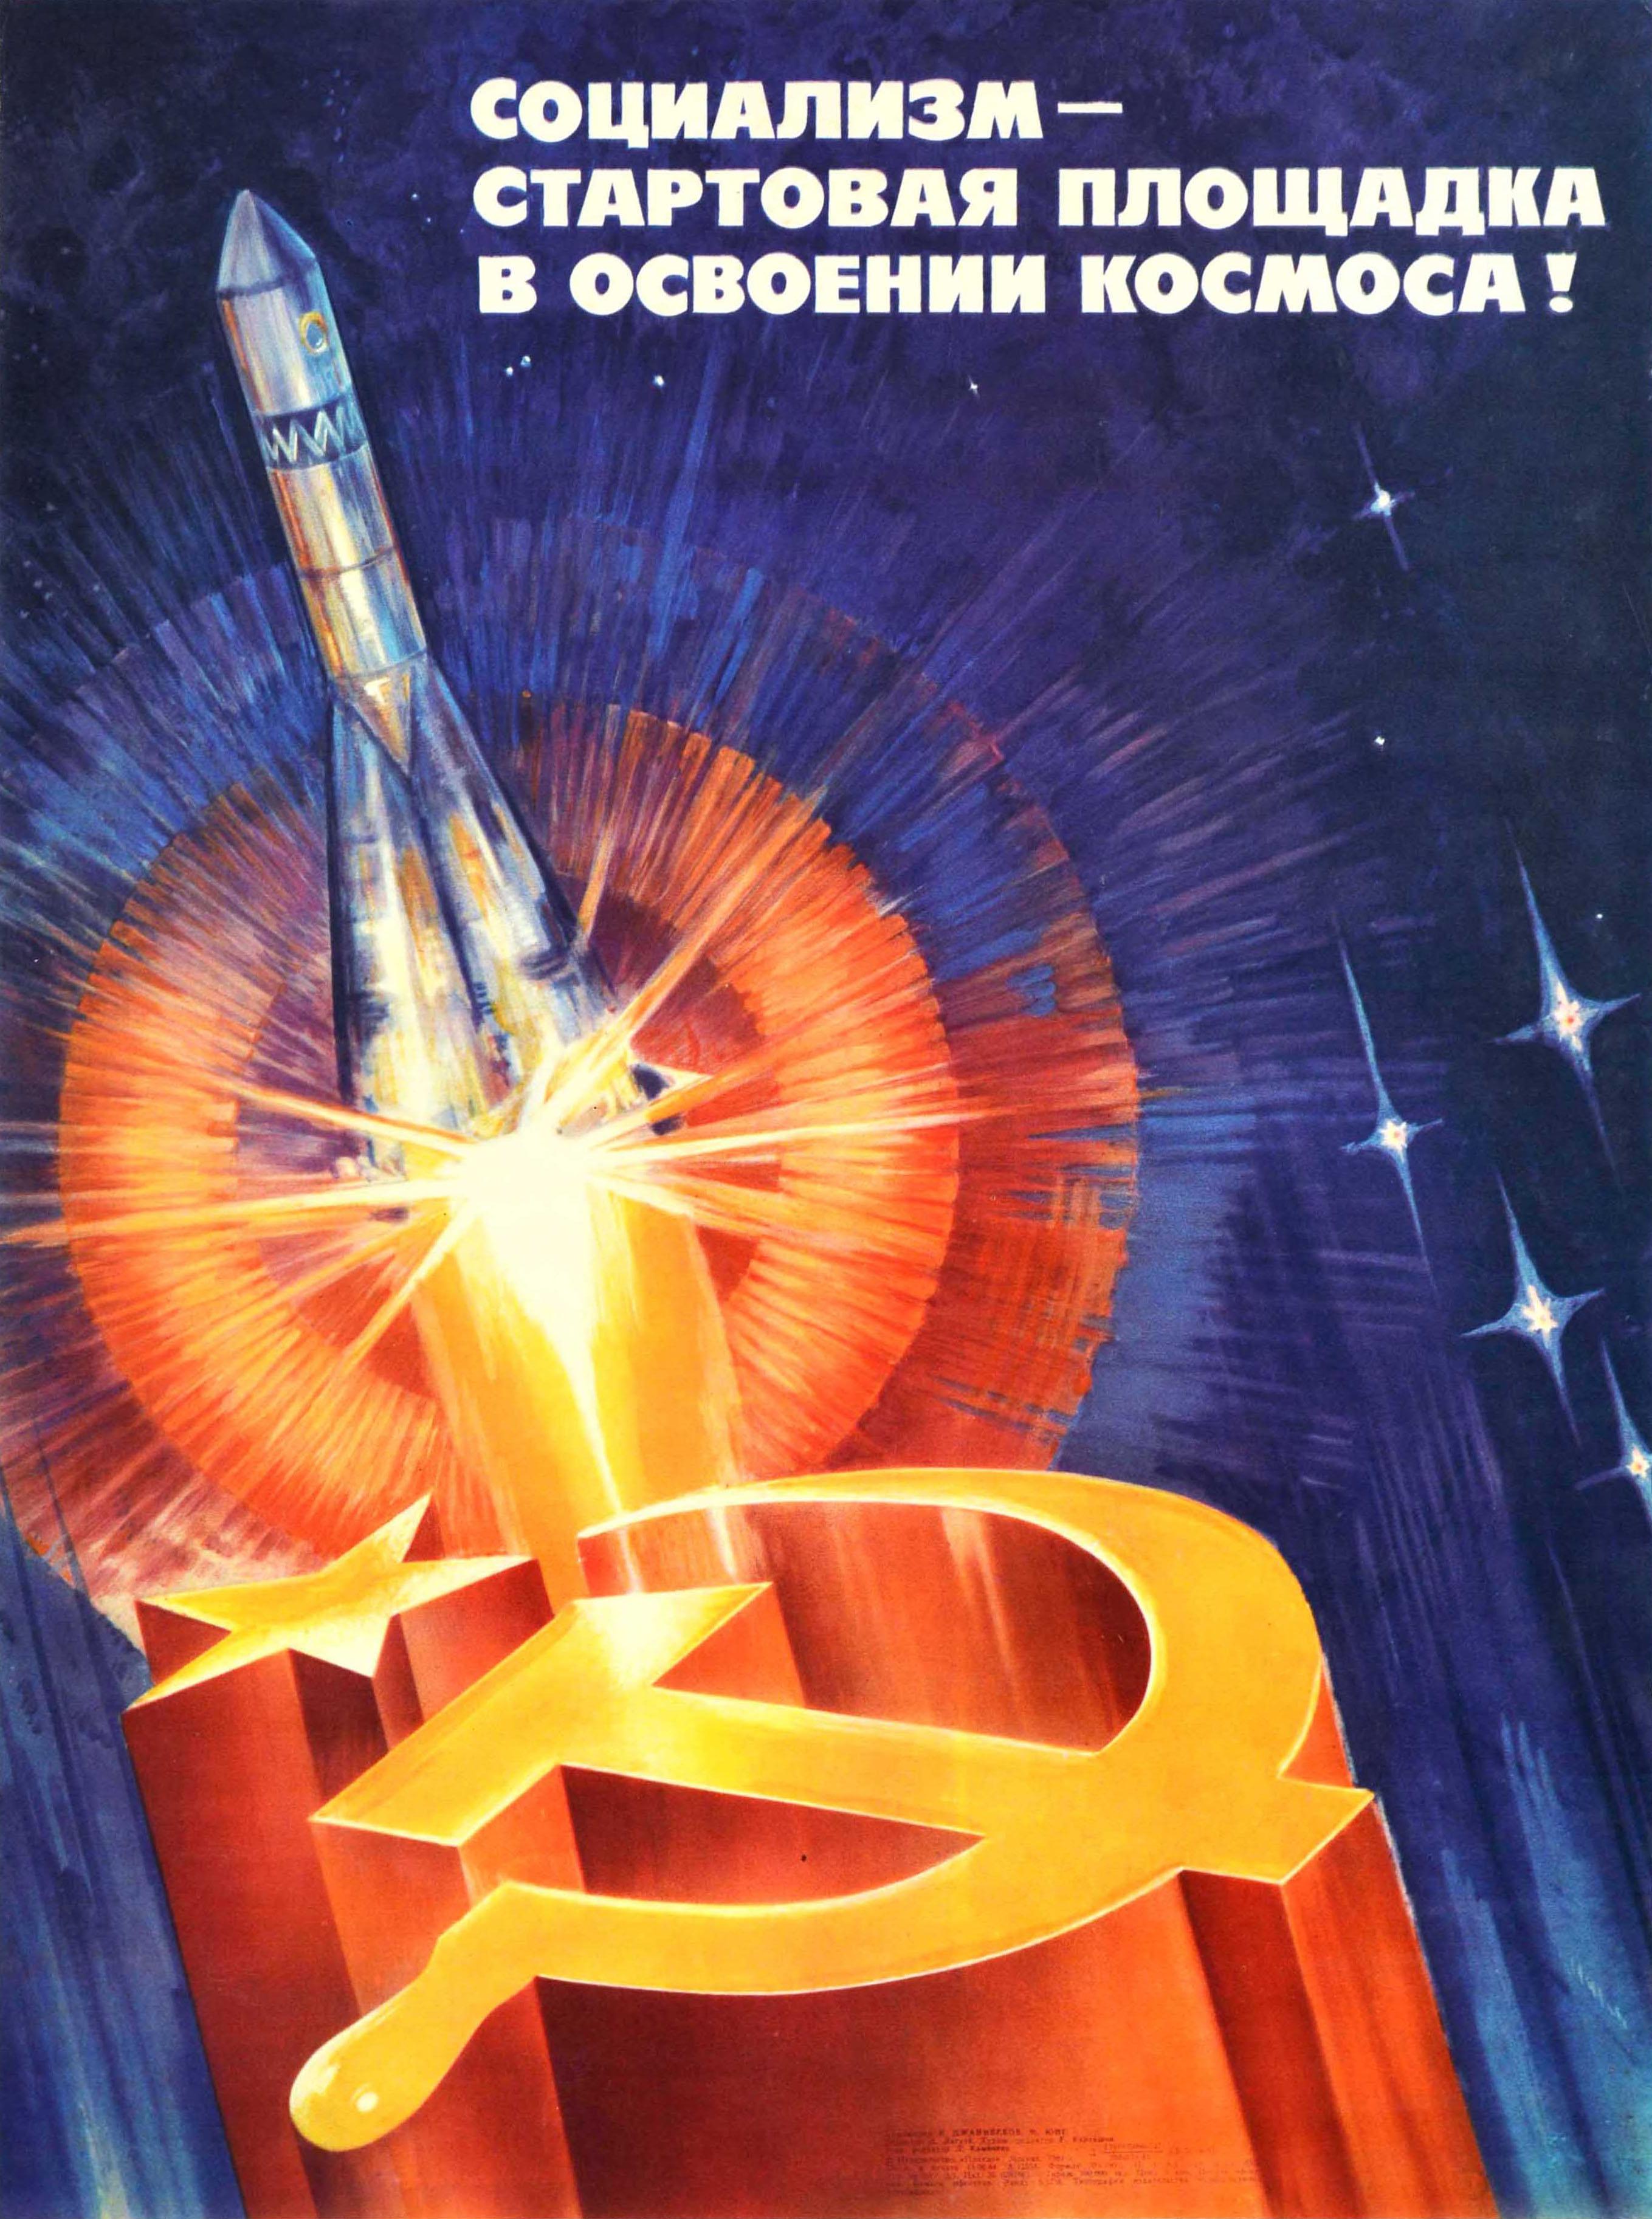 Dzhanibekov Print - Original Vintage Soviet Poster Socialism Launching Pad To Space Exploration USSR